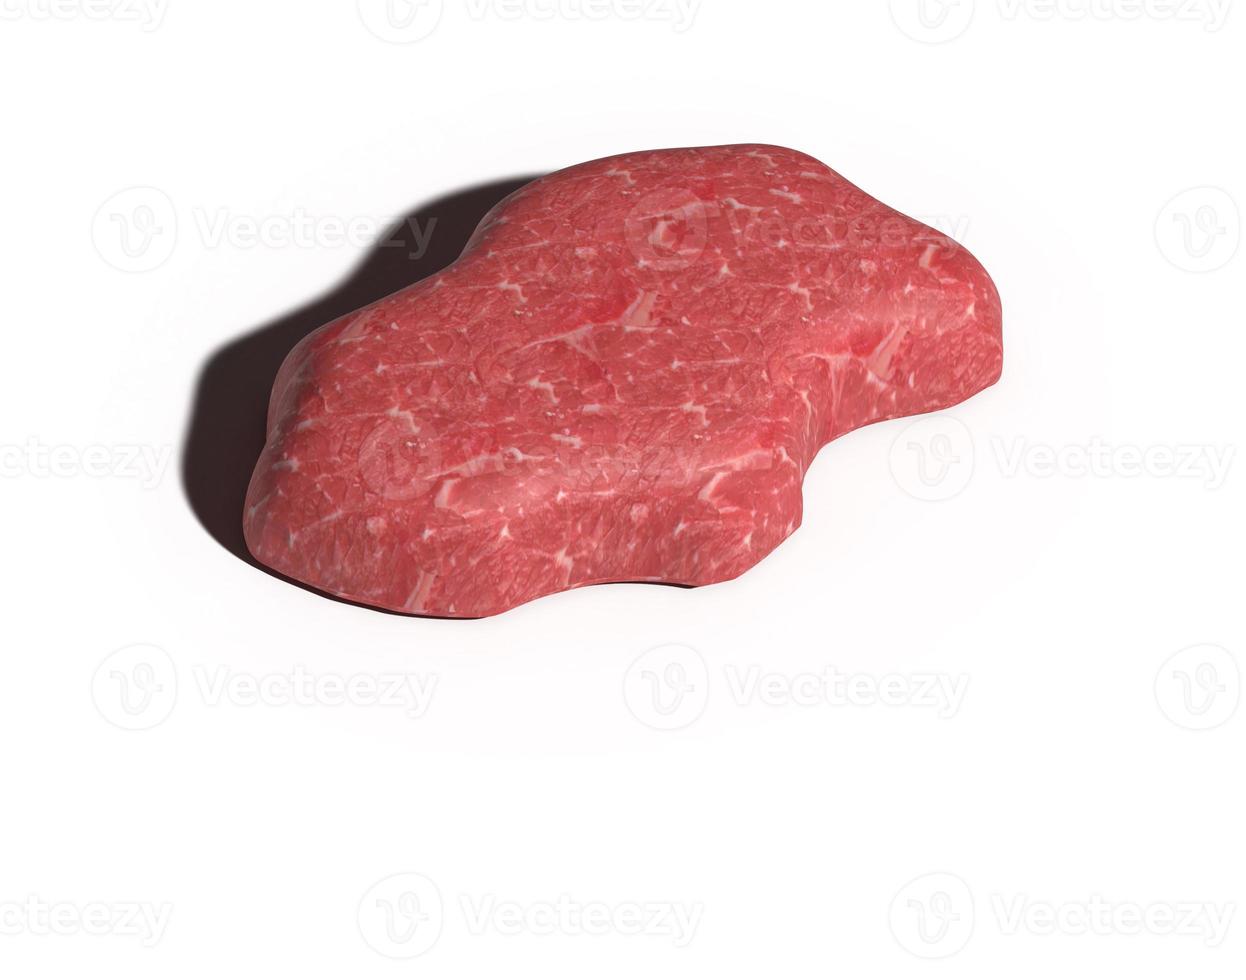 vers rundvlees steak dia's Aan wit achtergrond foto